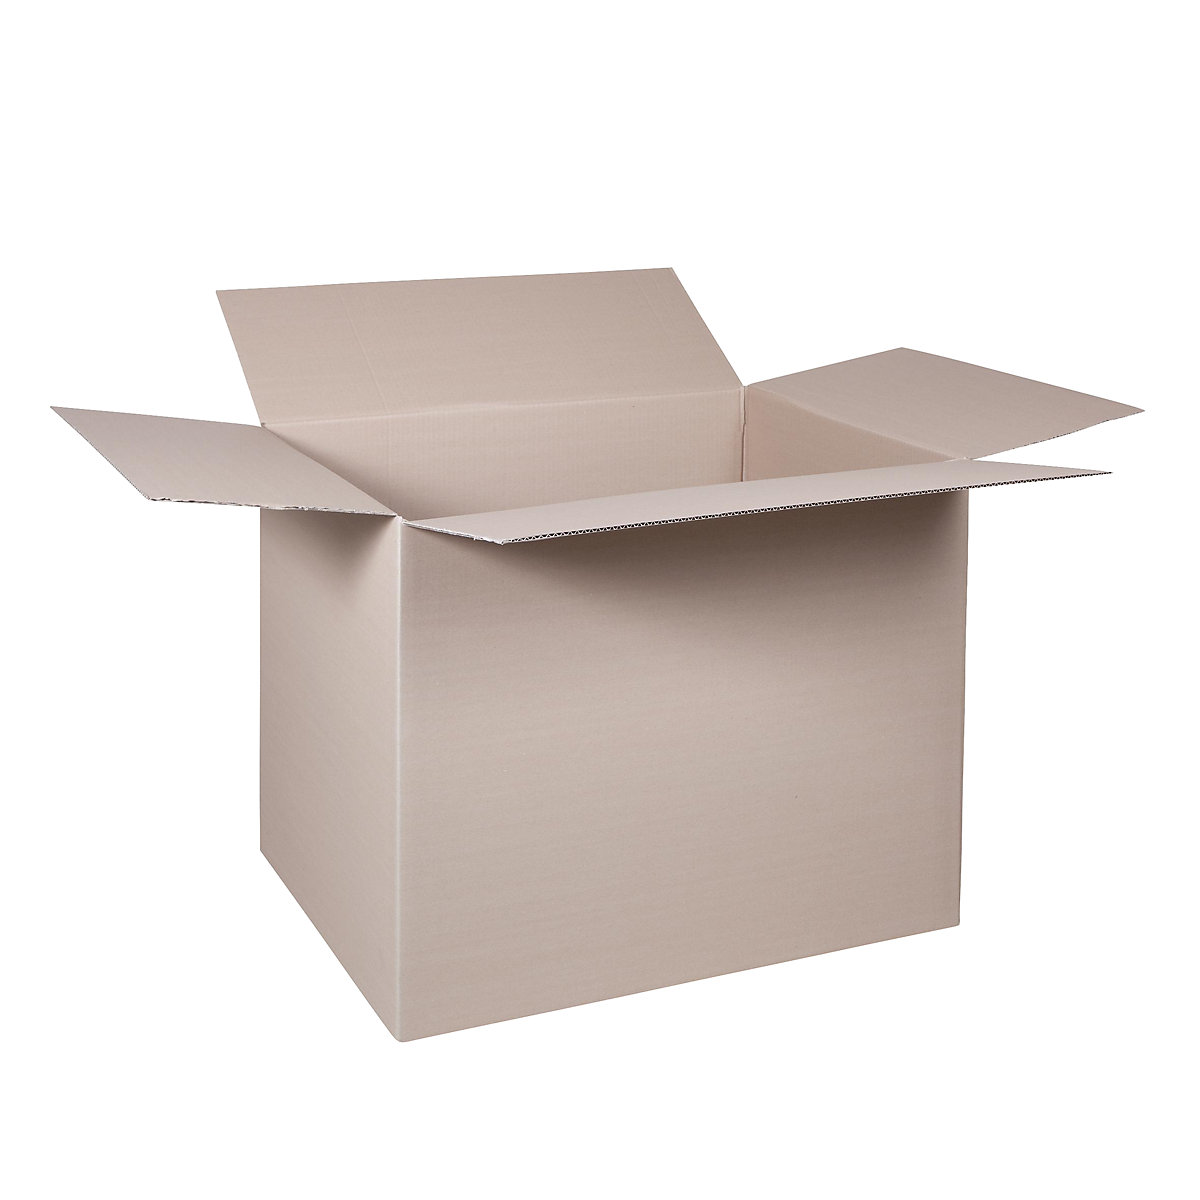 Folding cardboard box, FEFCO 0201, made of single fluted cardboard, internal dimensions 600 x 400 x 400 mm, pack of 50-2